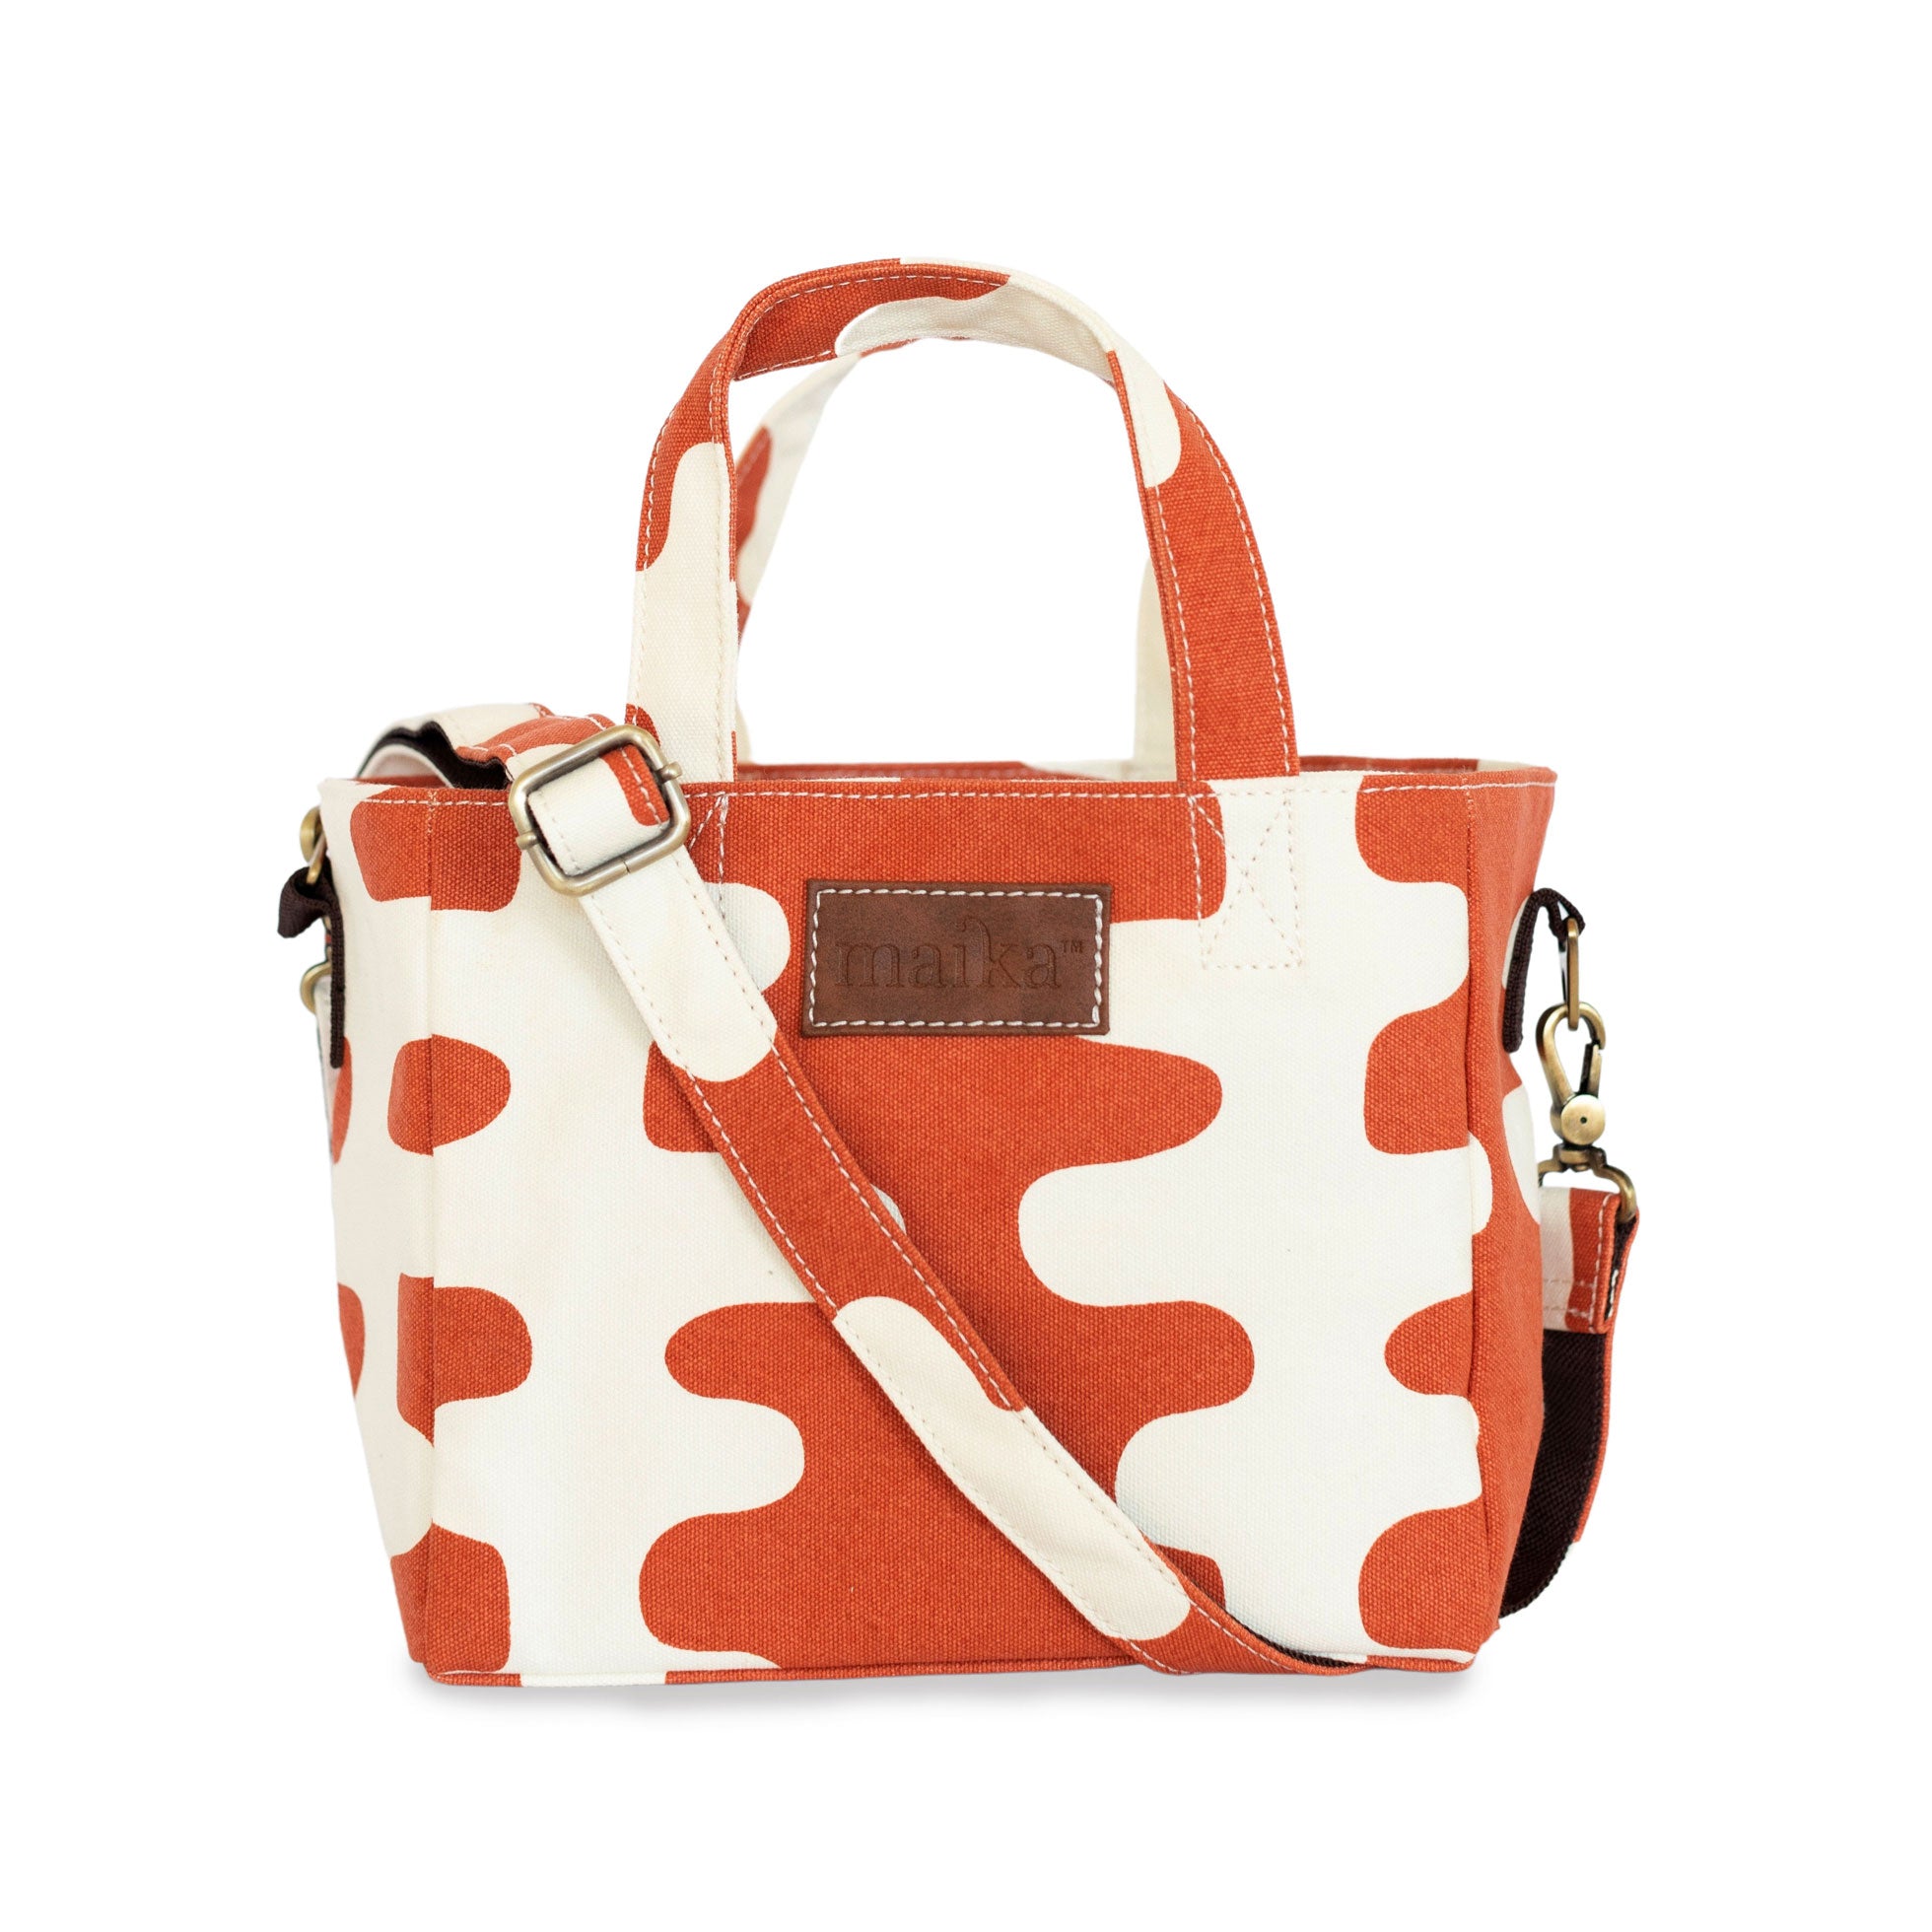 Classic Style Crossbody Bag, Polka Dot Print Shoulder Bag, Women's